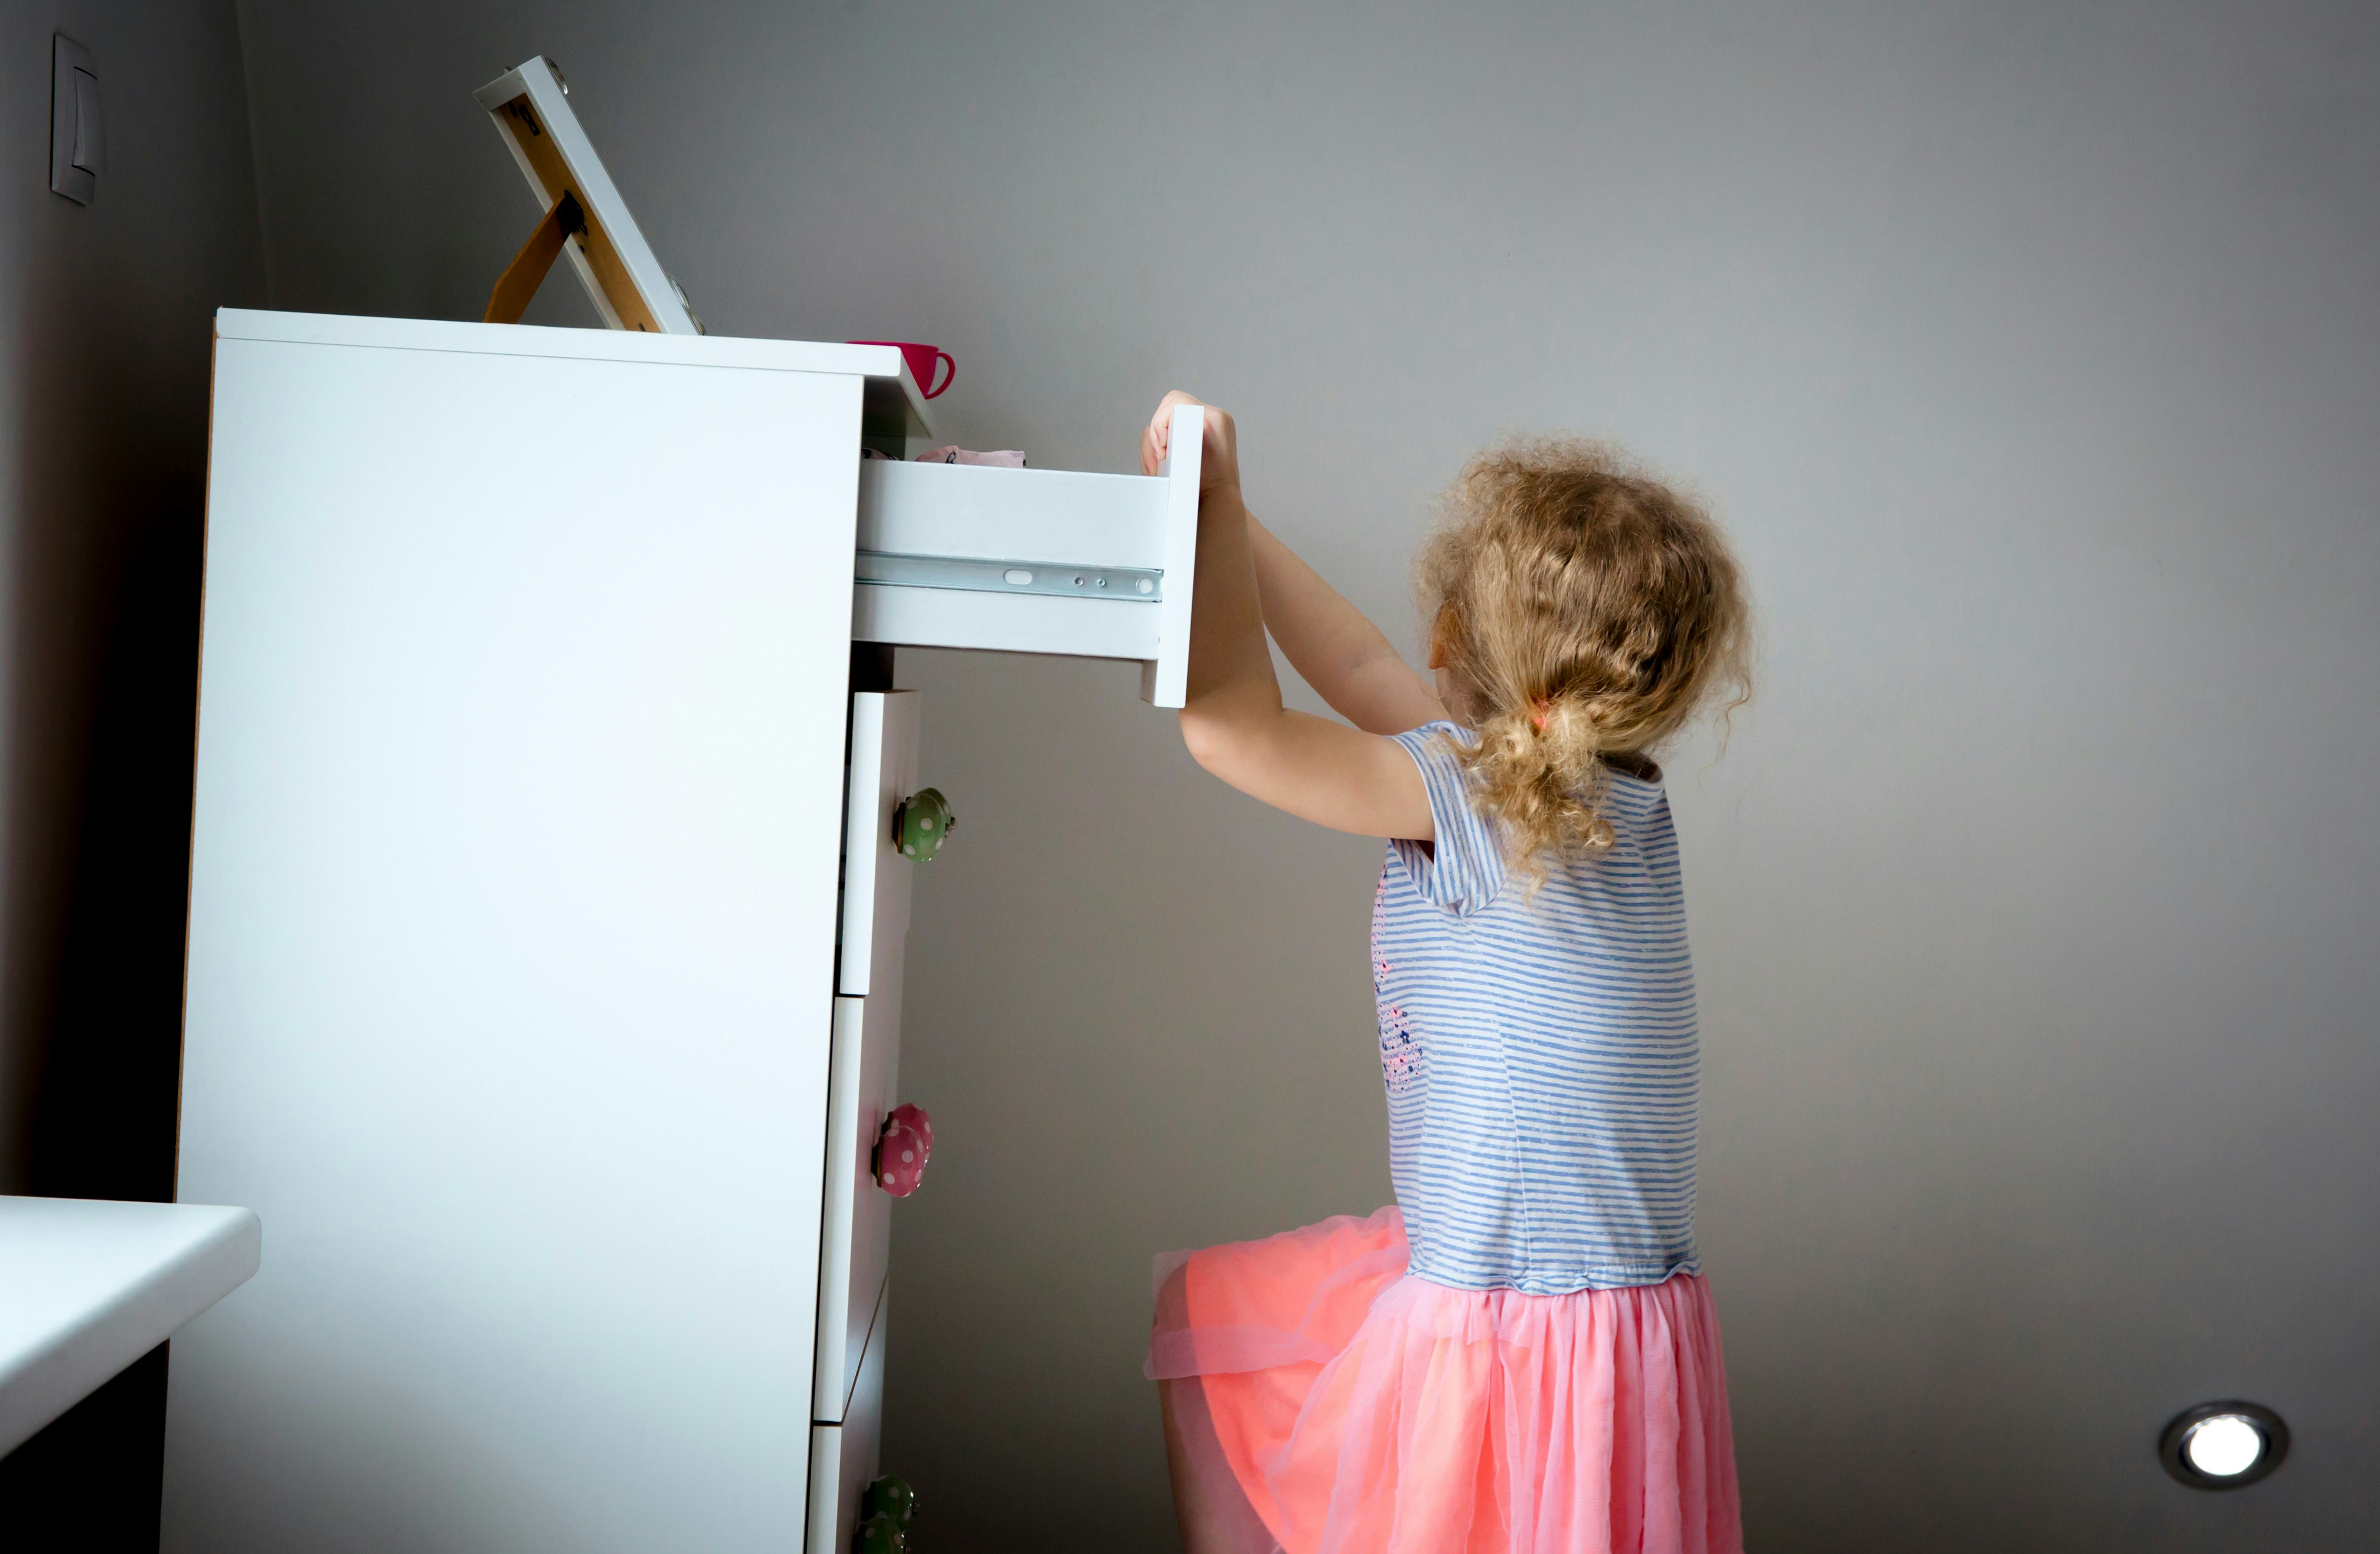 Child Climbing on High Dresser Furniture